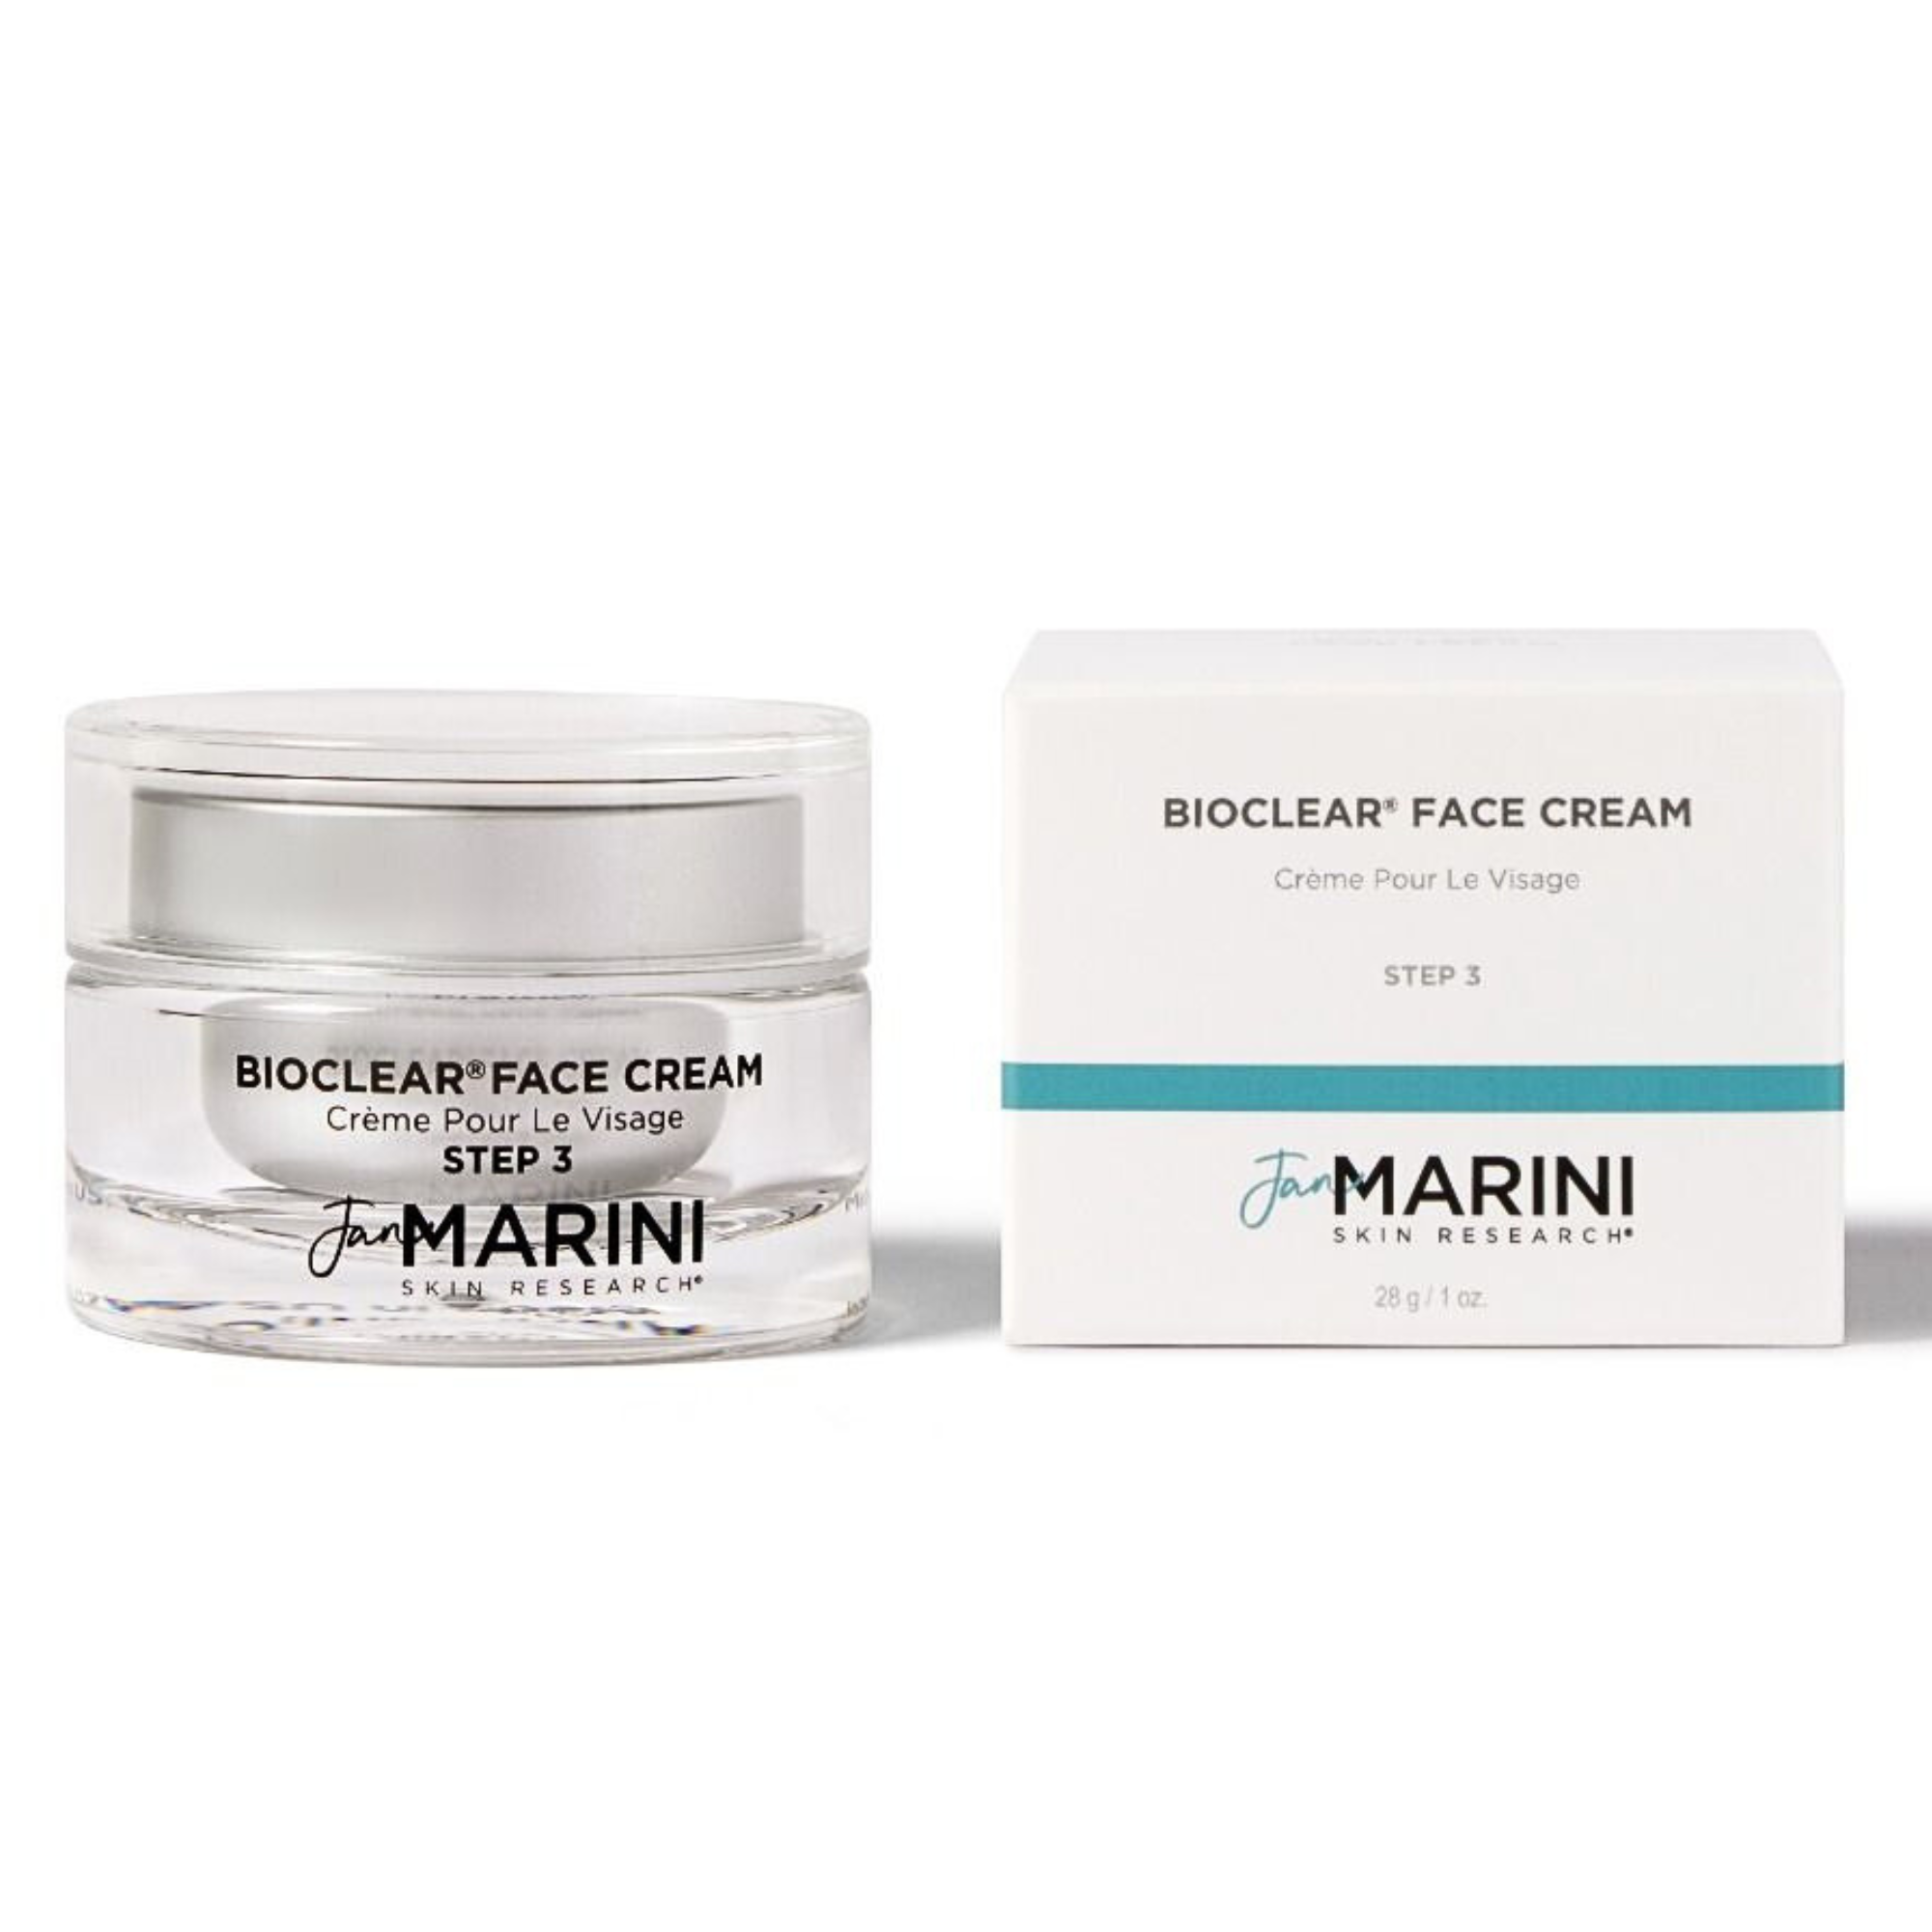 Jan Marini Bioclear Face Cream Shop Exclusive Beauty Club Skincare